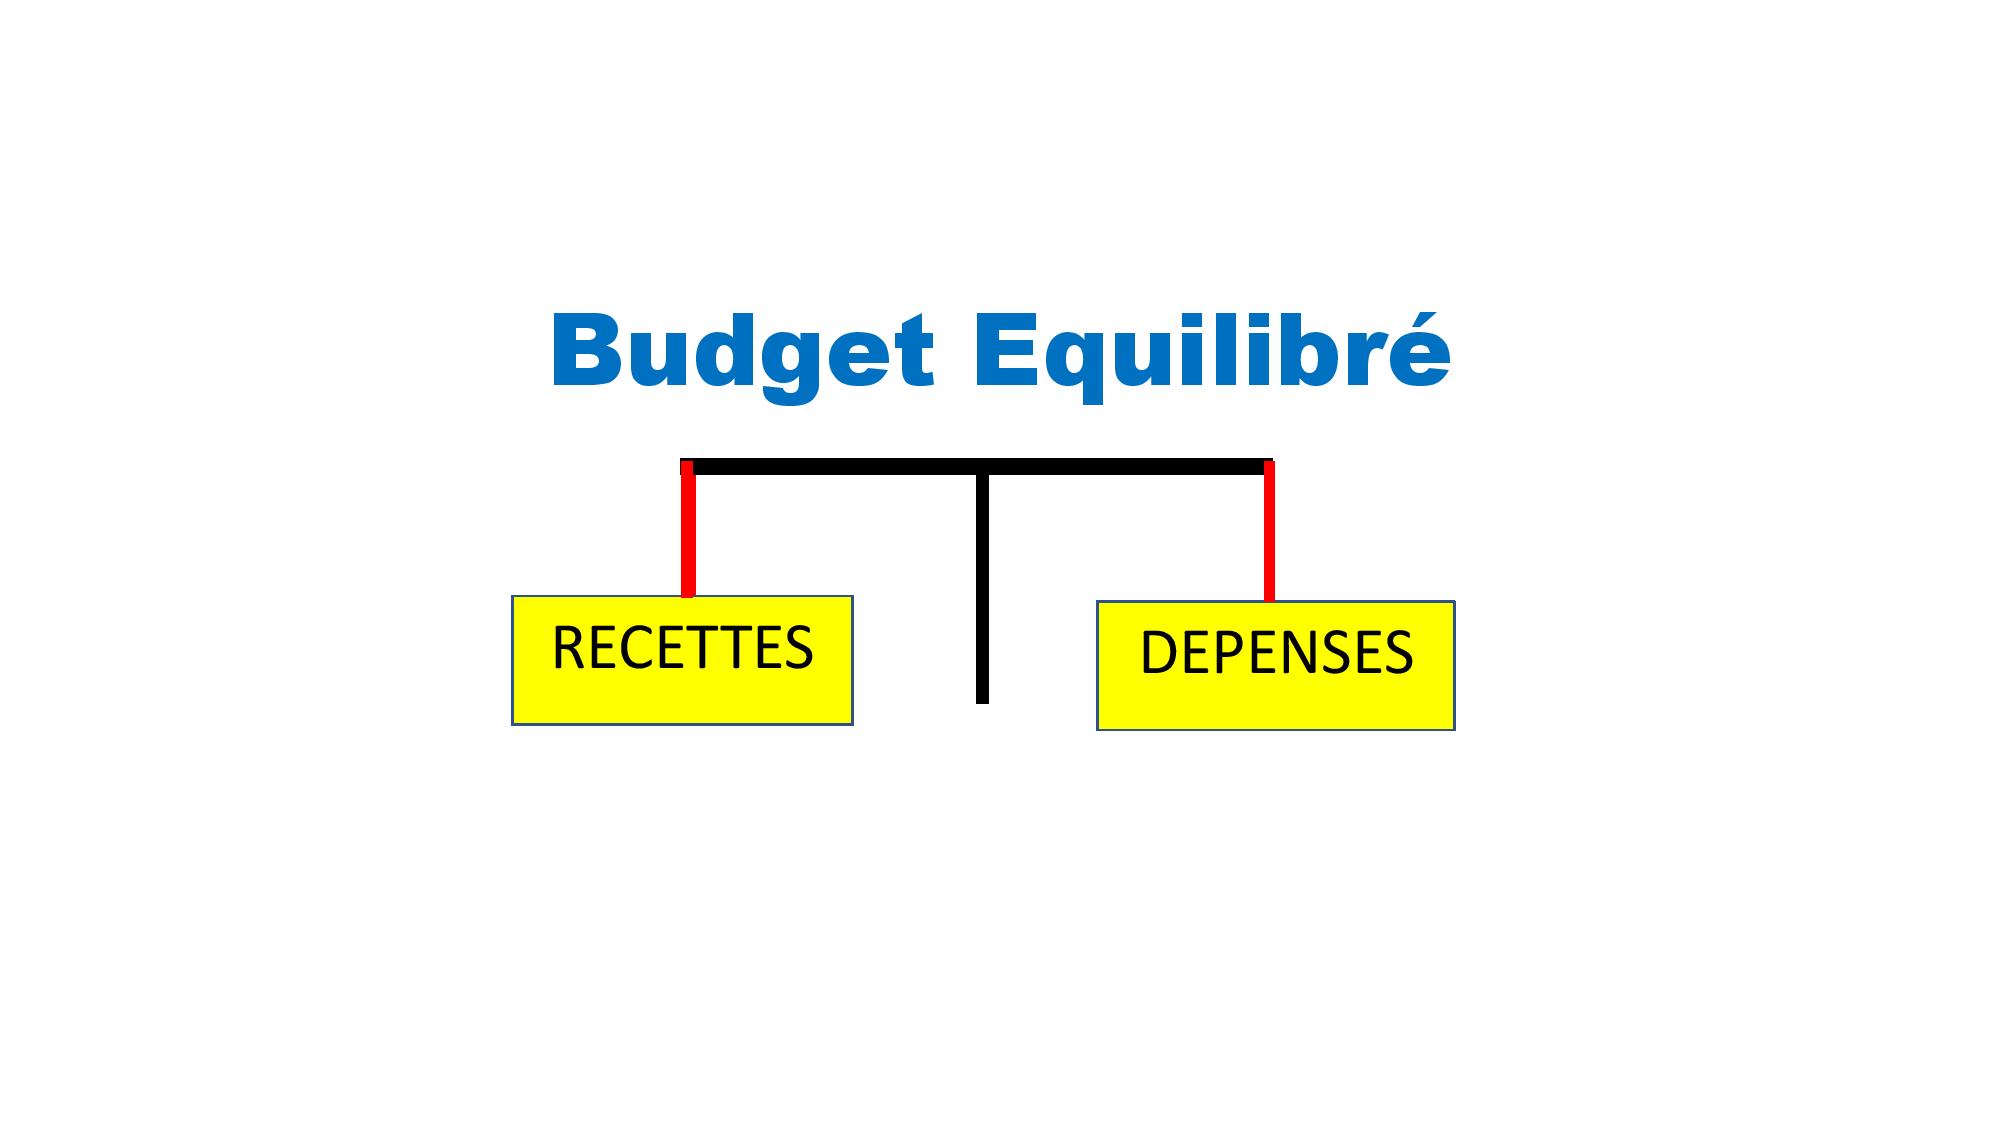 Budget Equilibré